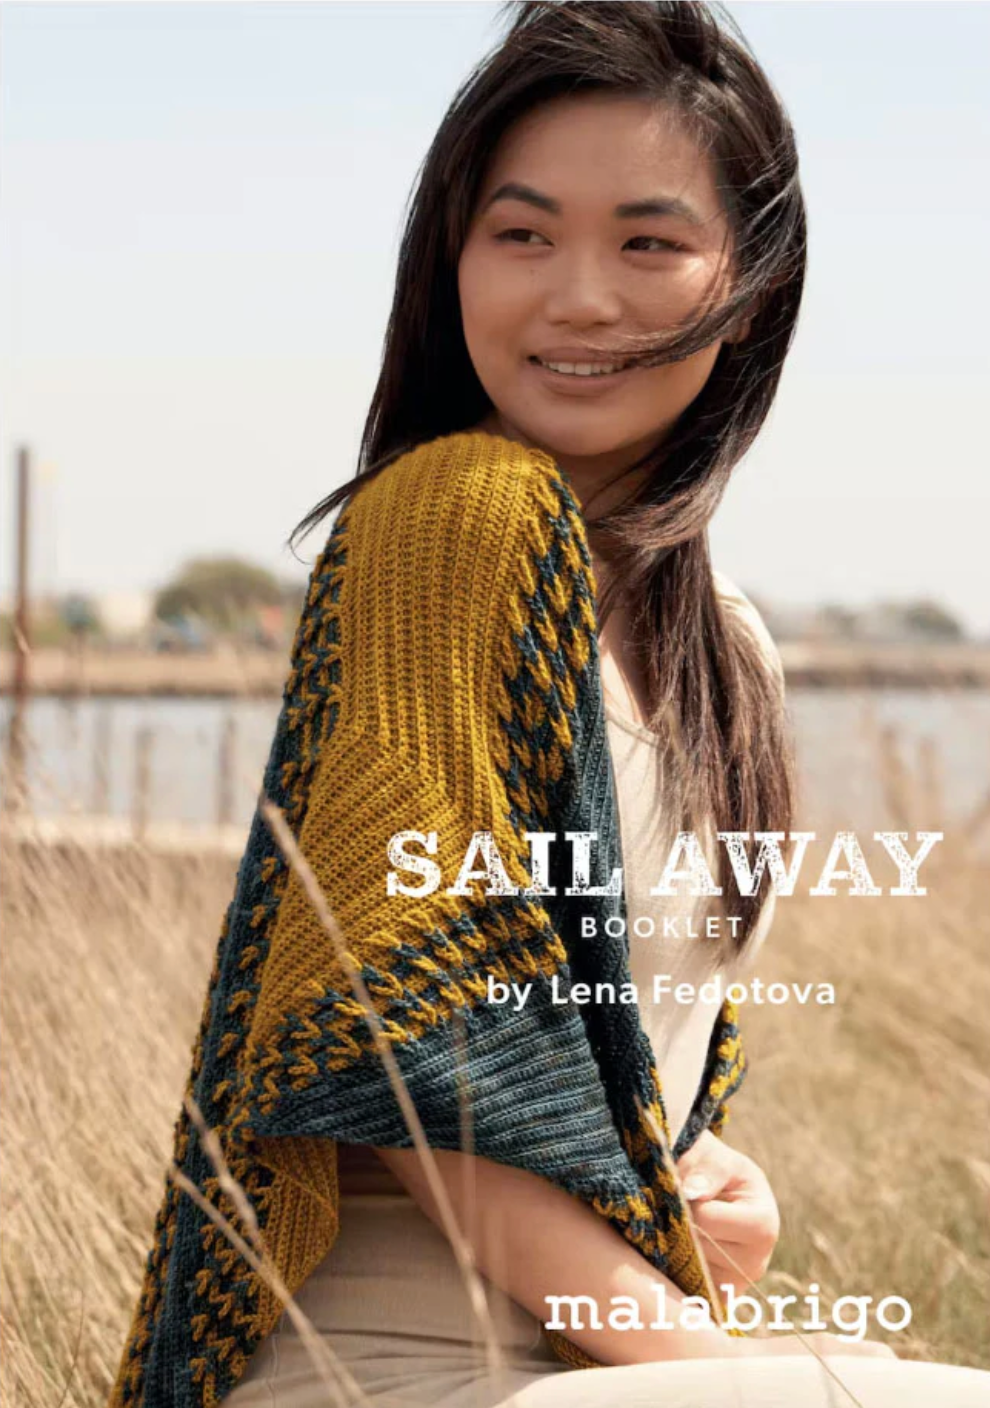 Sail Away Booklet by Lena Fedotova